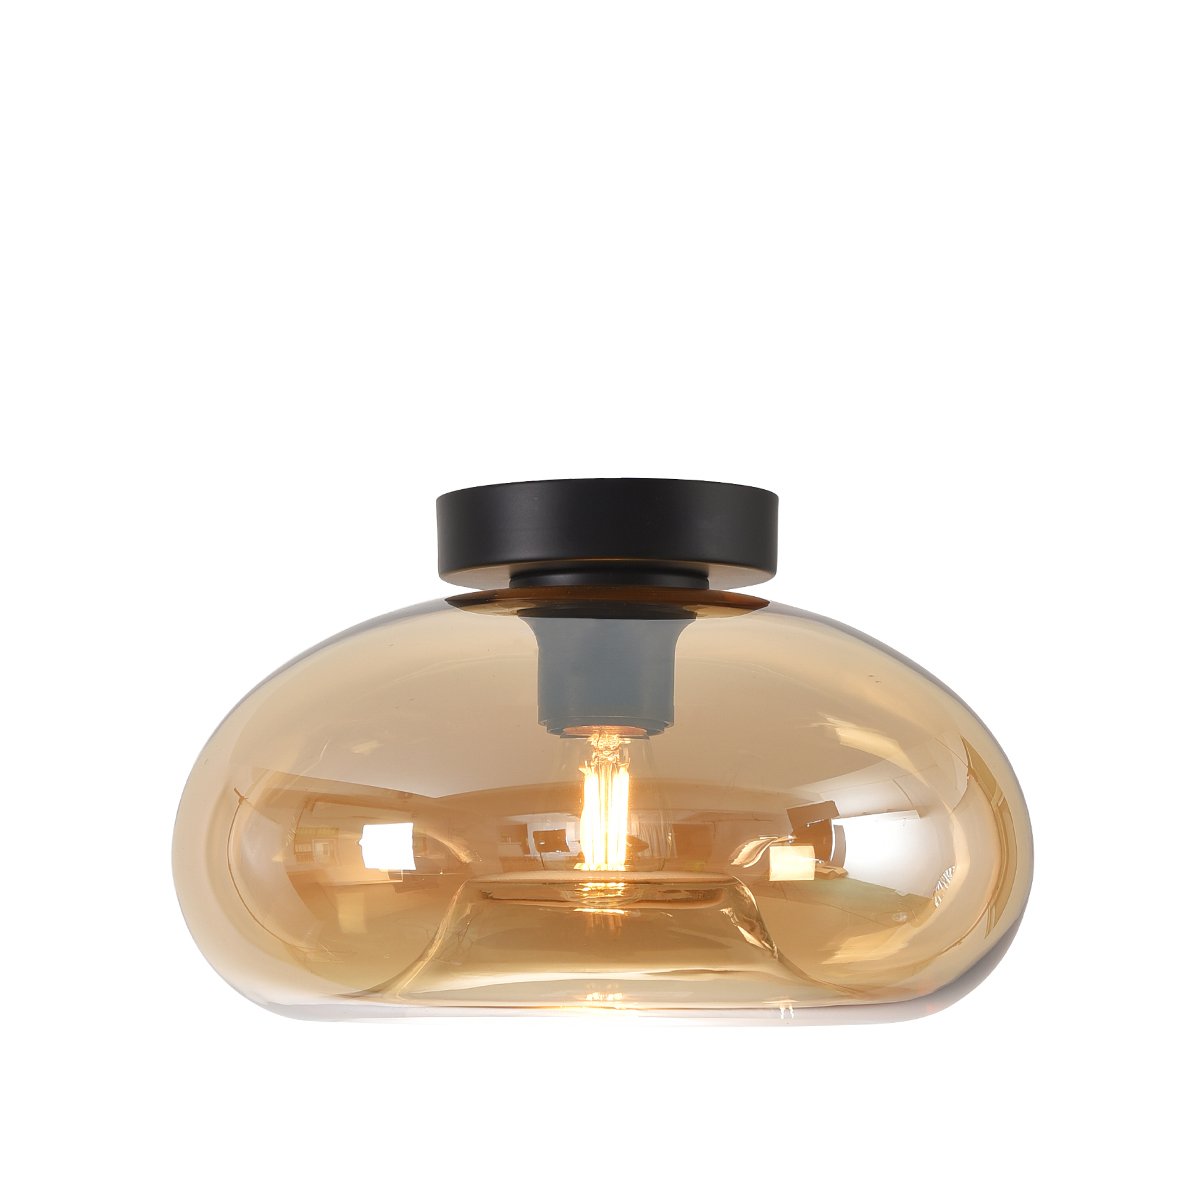 Slaapkamerverlichting Plafondlamp rond goud glas Edolo - Ø 28 cm